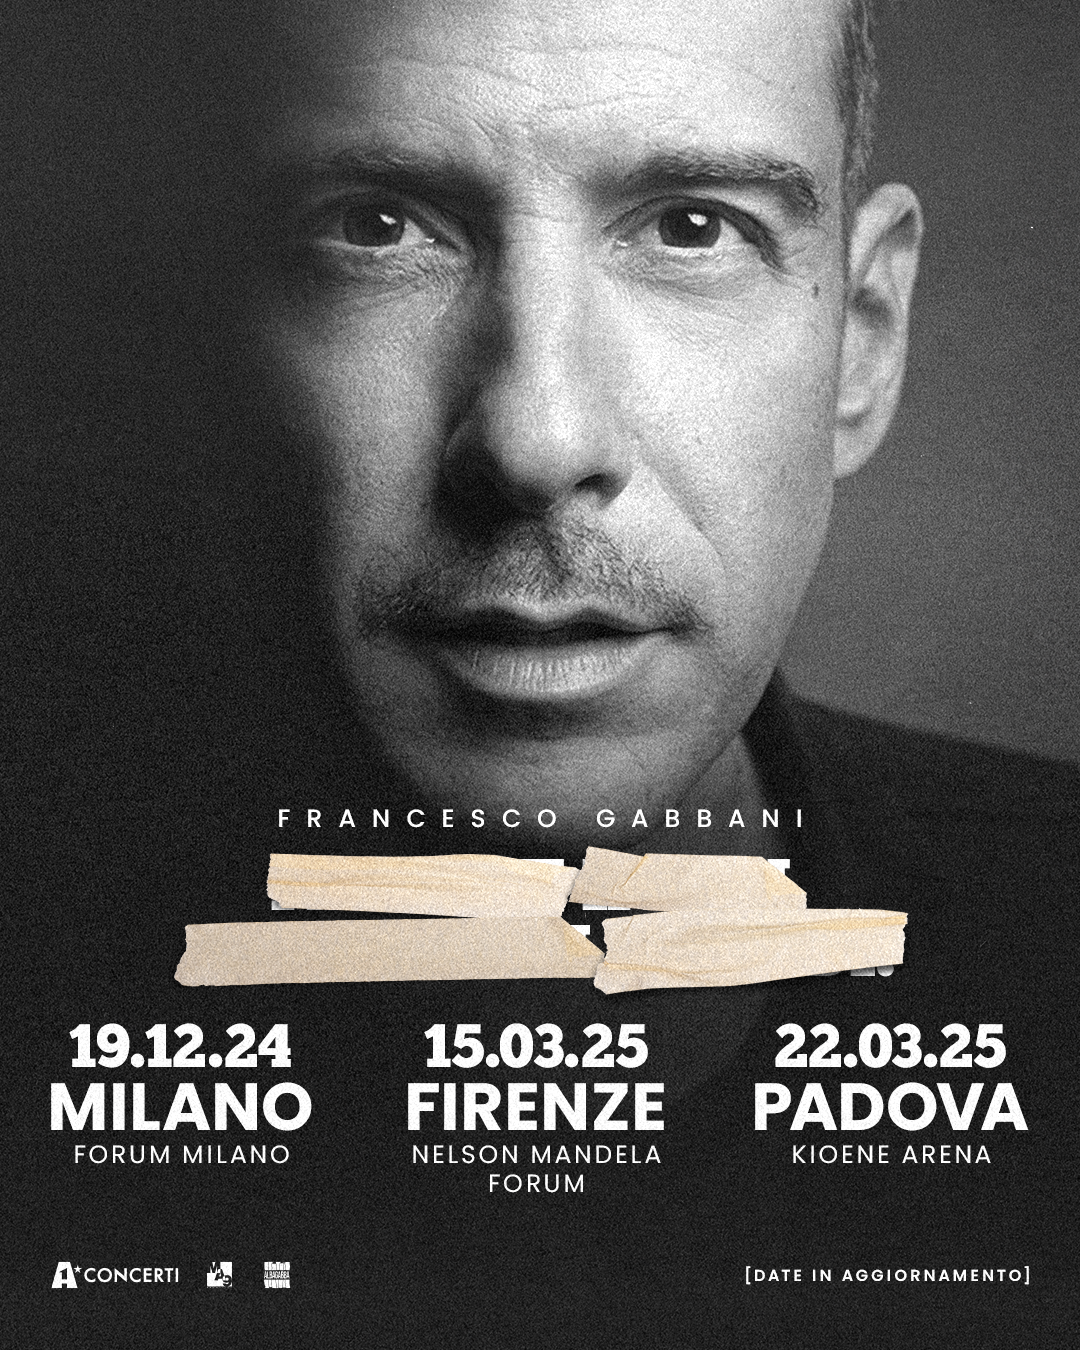 Francesco Gabbani live